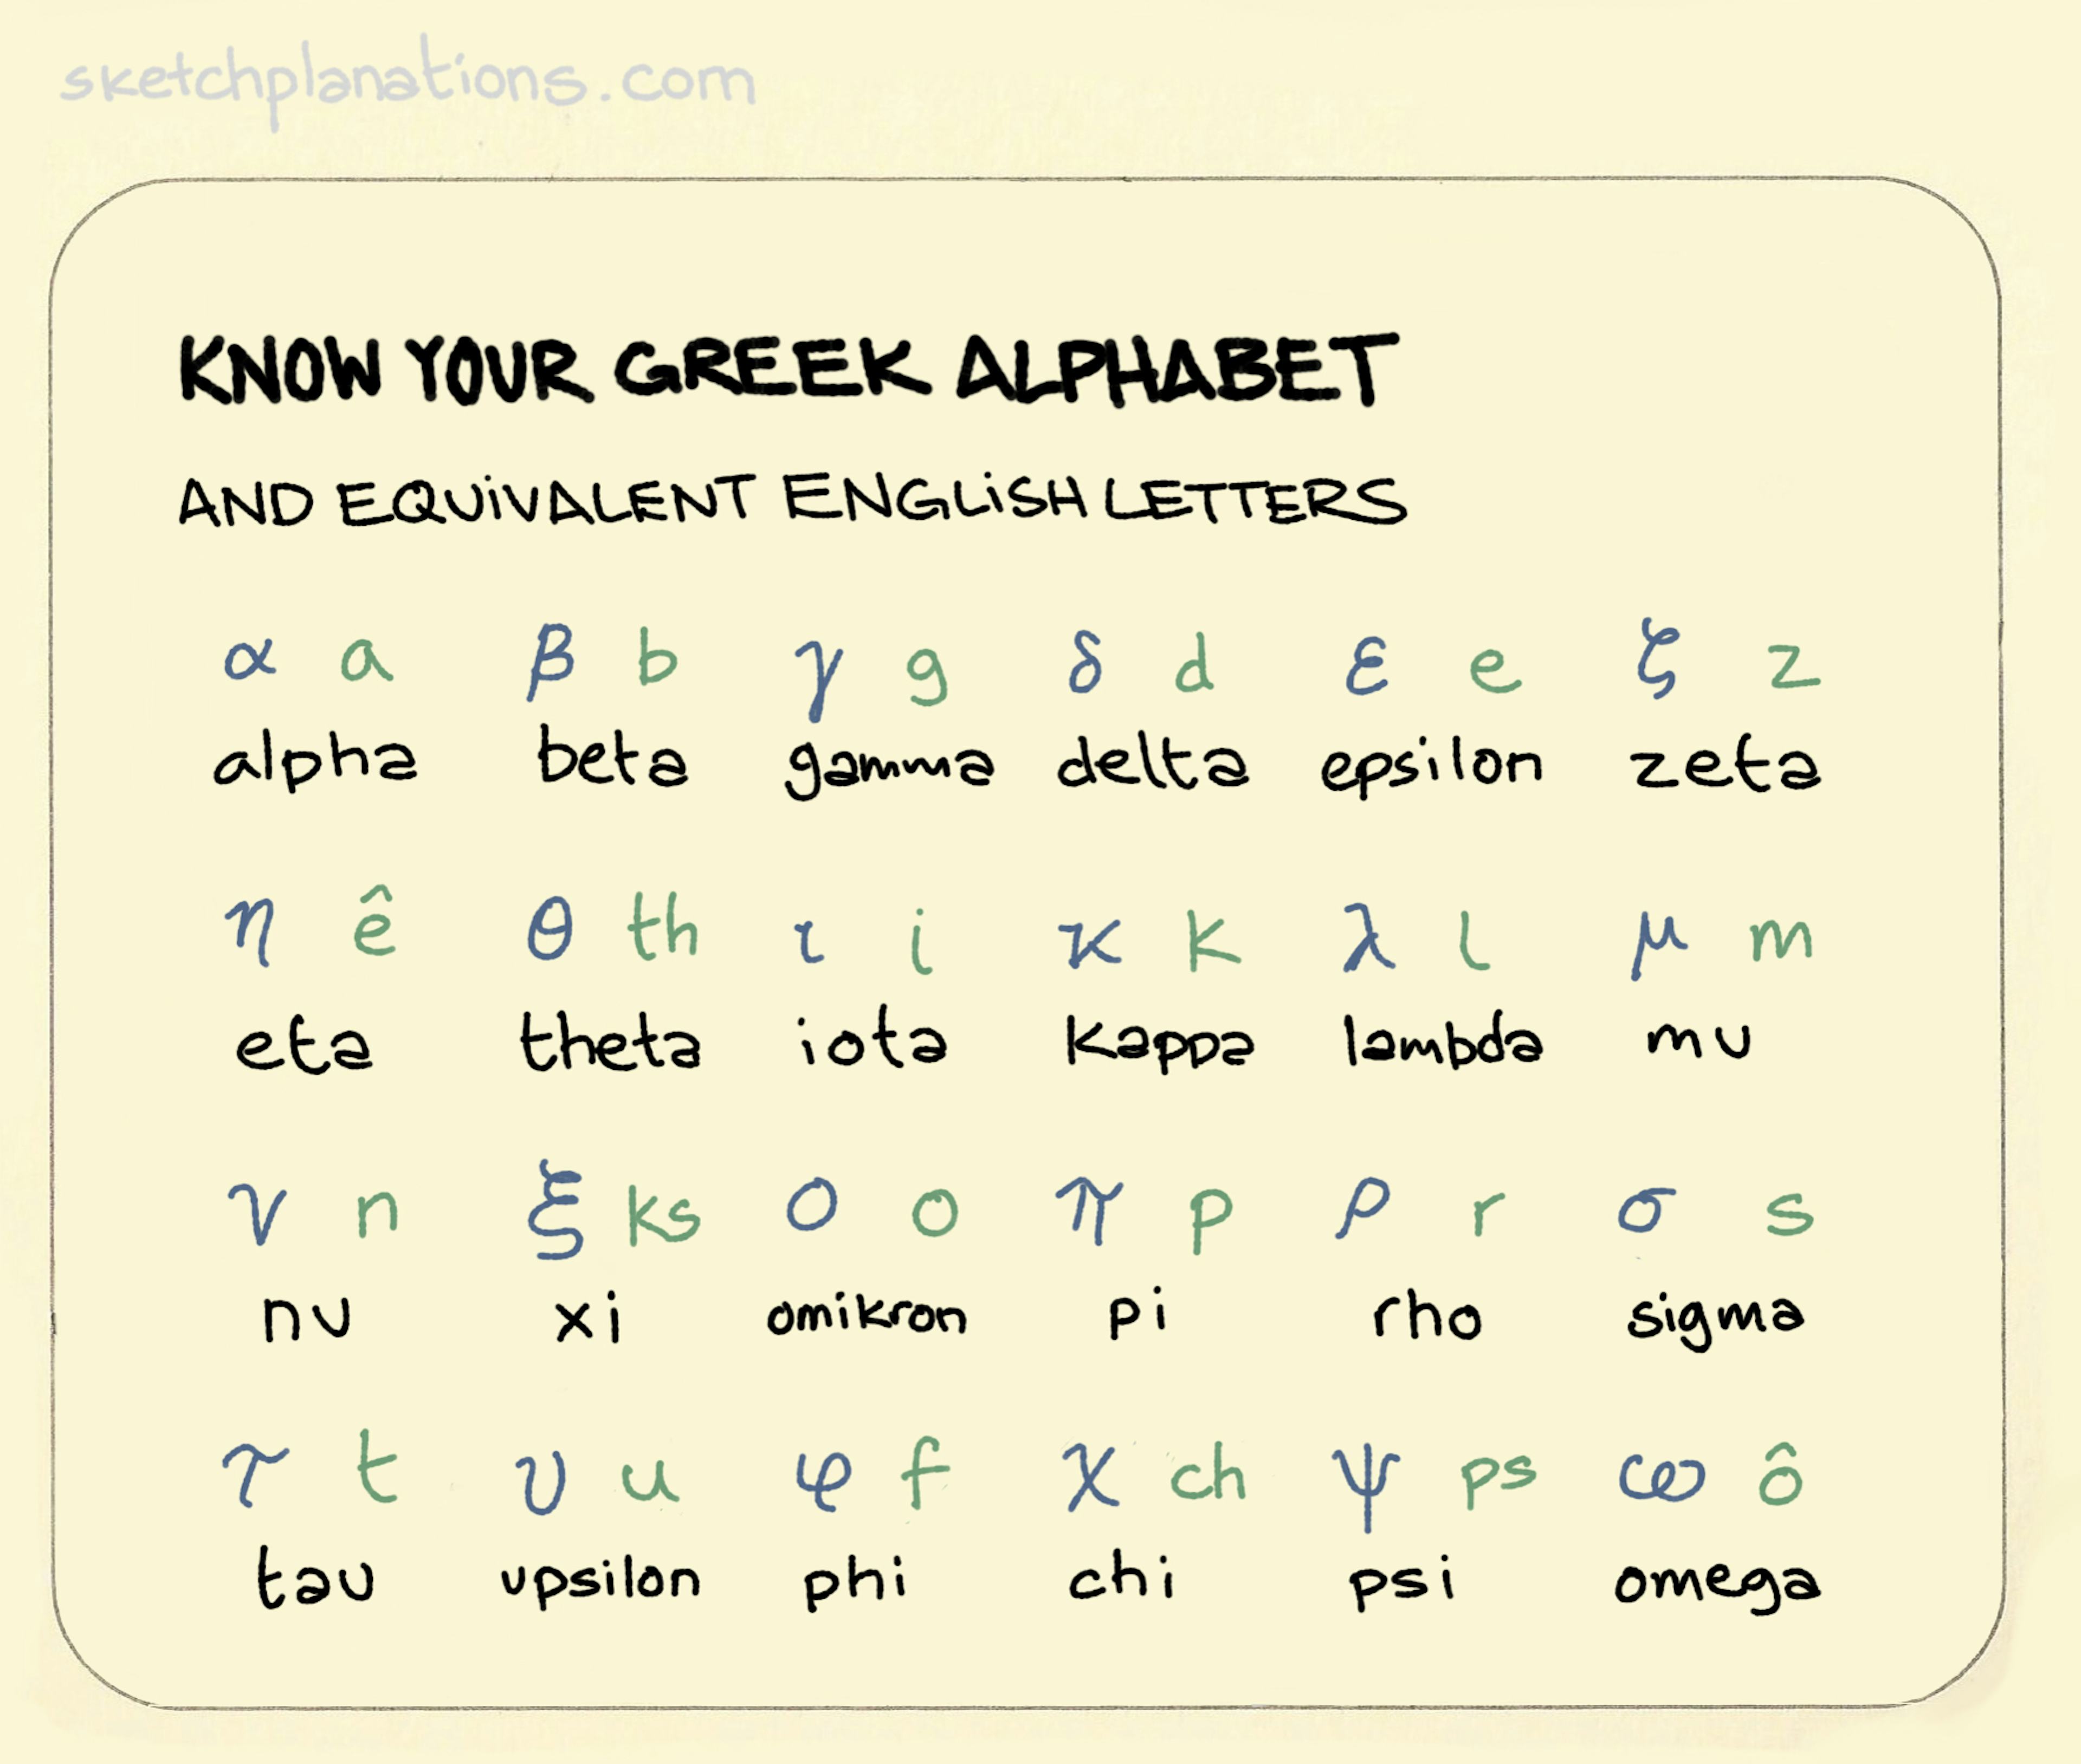 Know your Greek alphabet - Sketchplanations